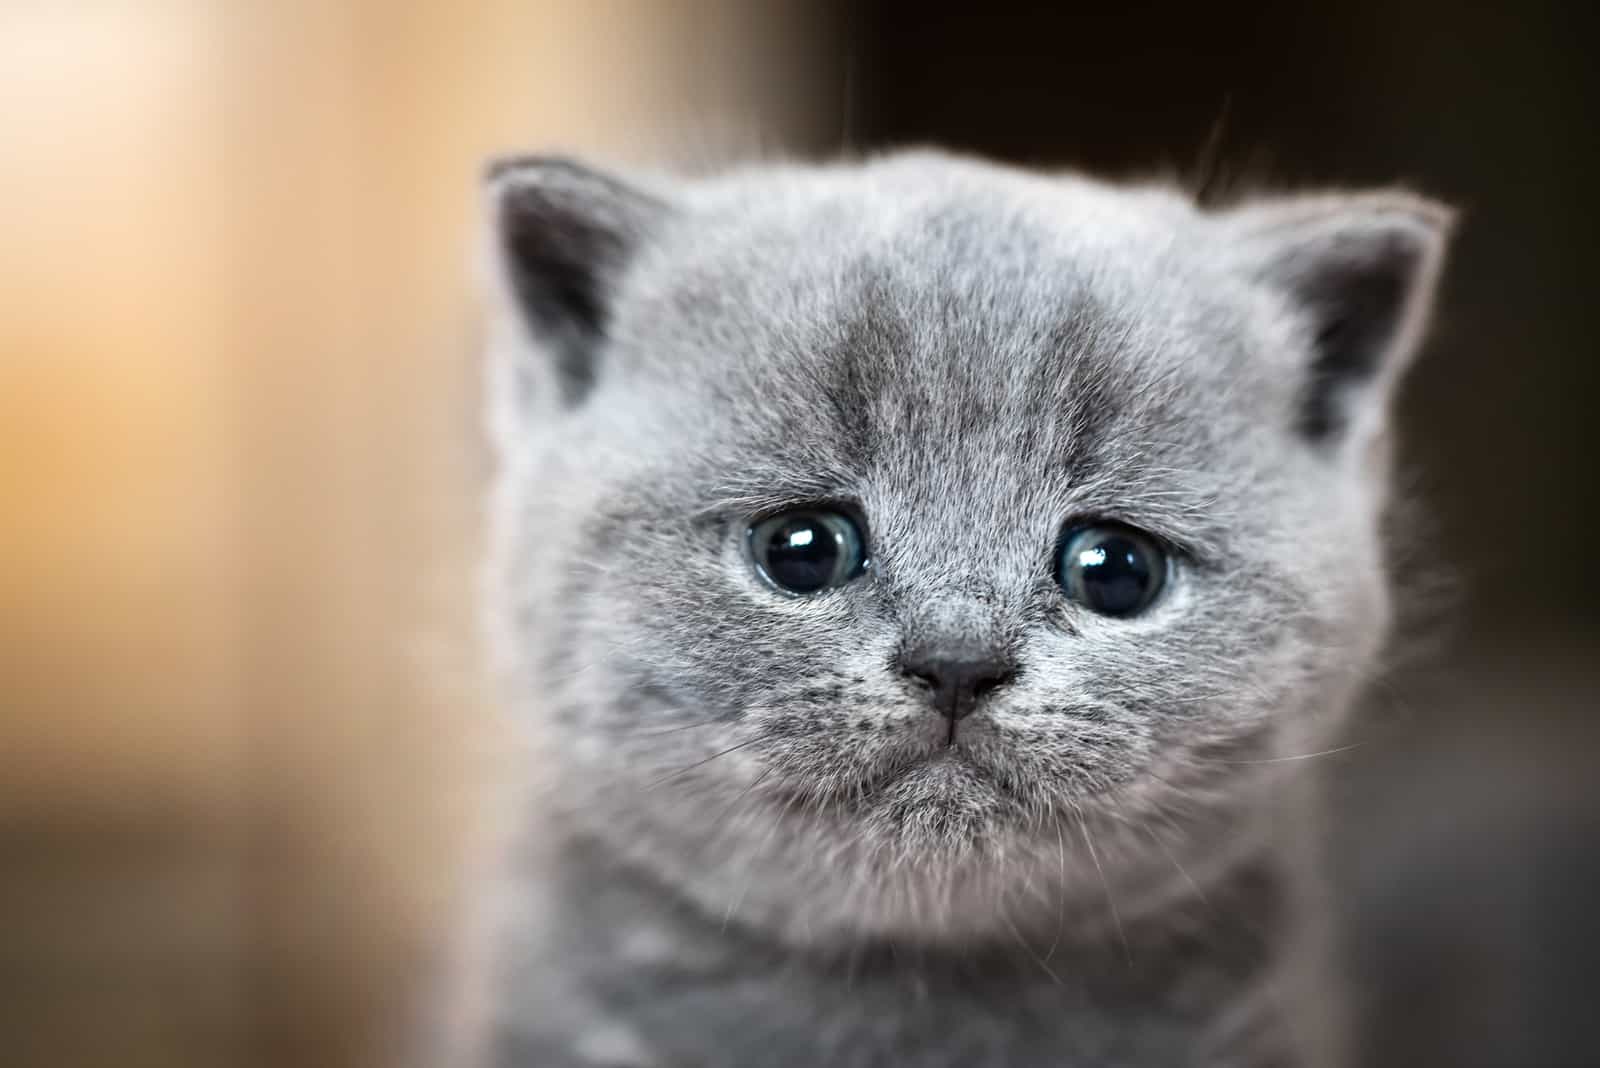  British Shorthair cat crying